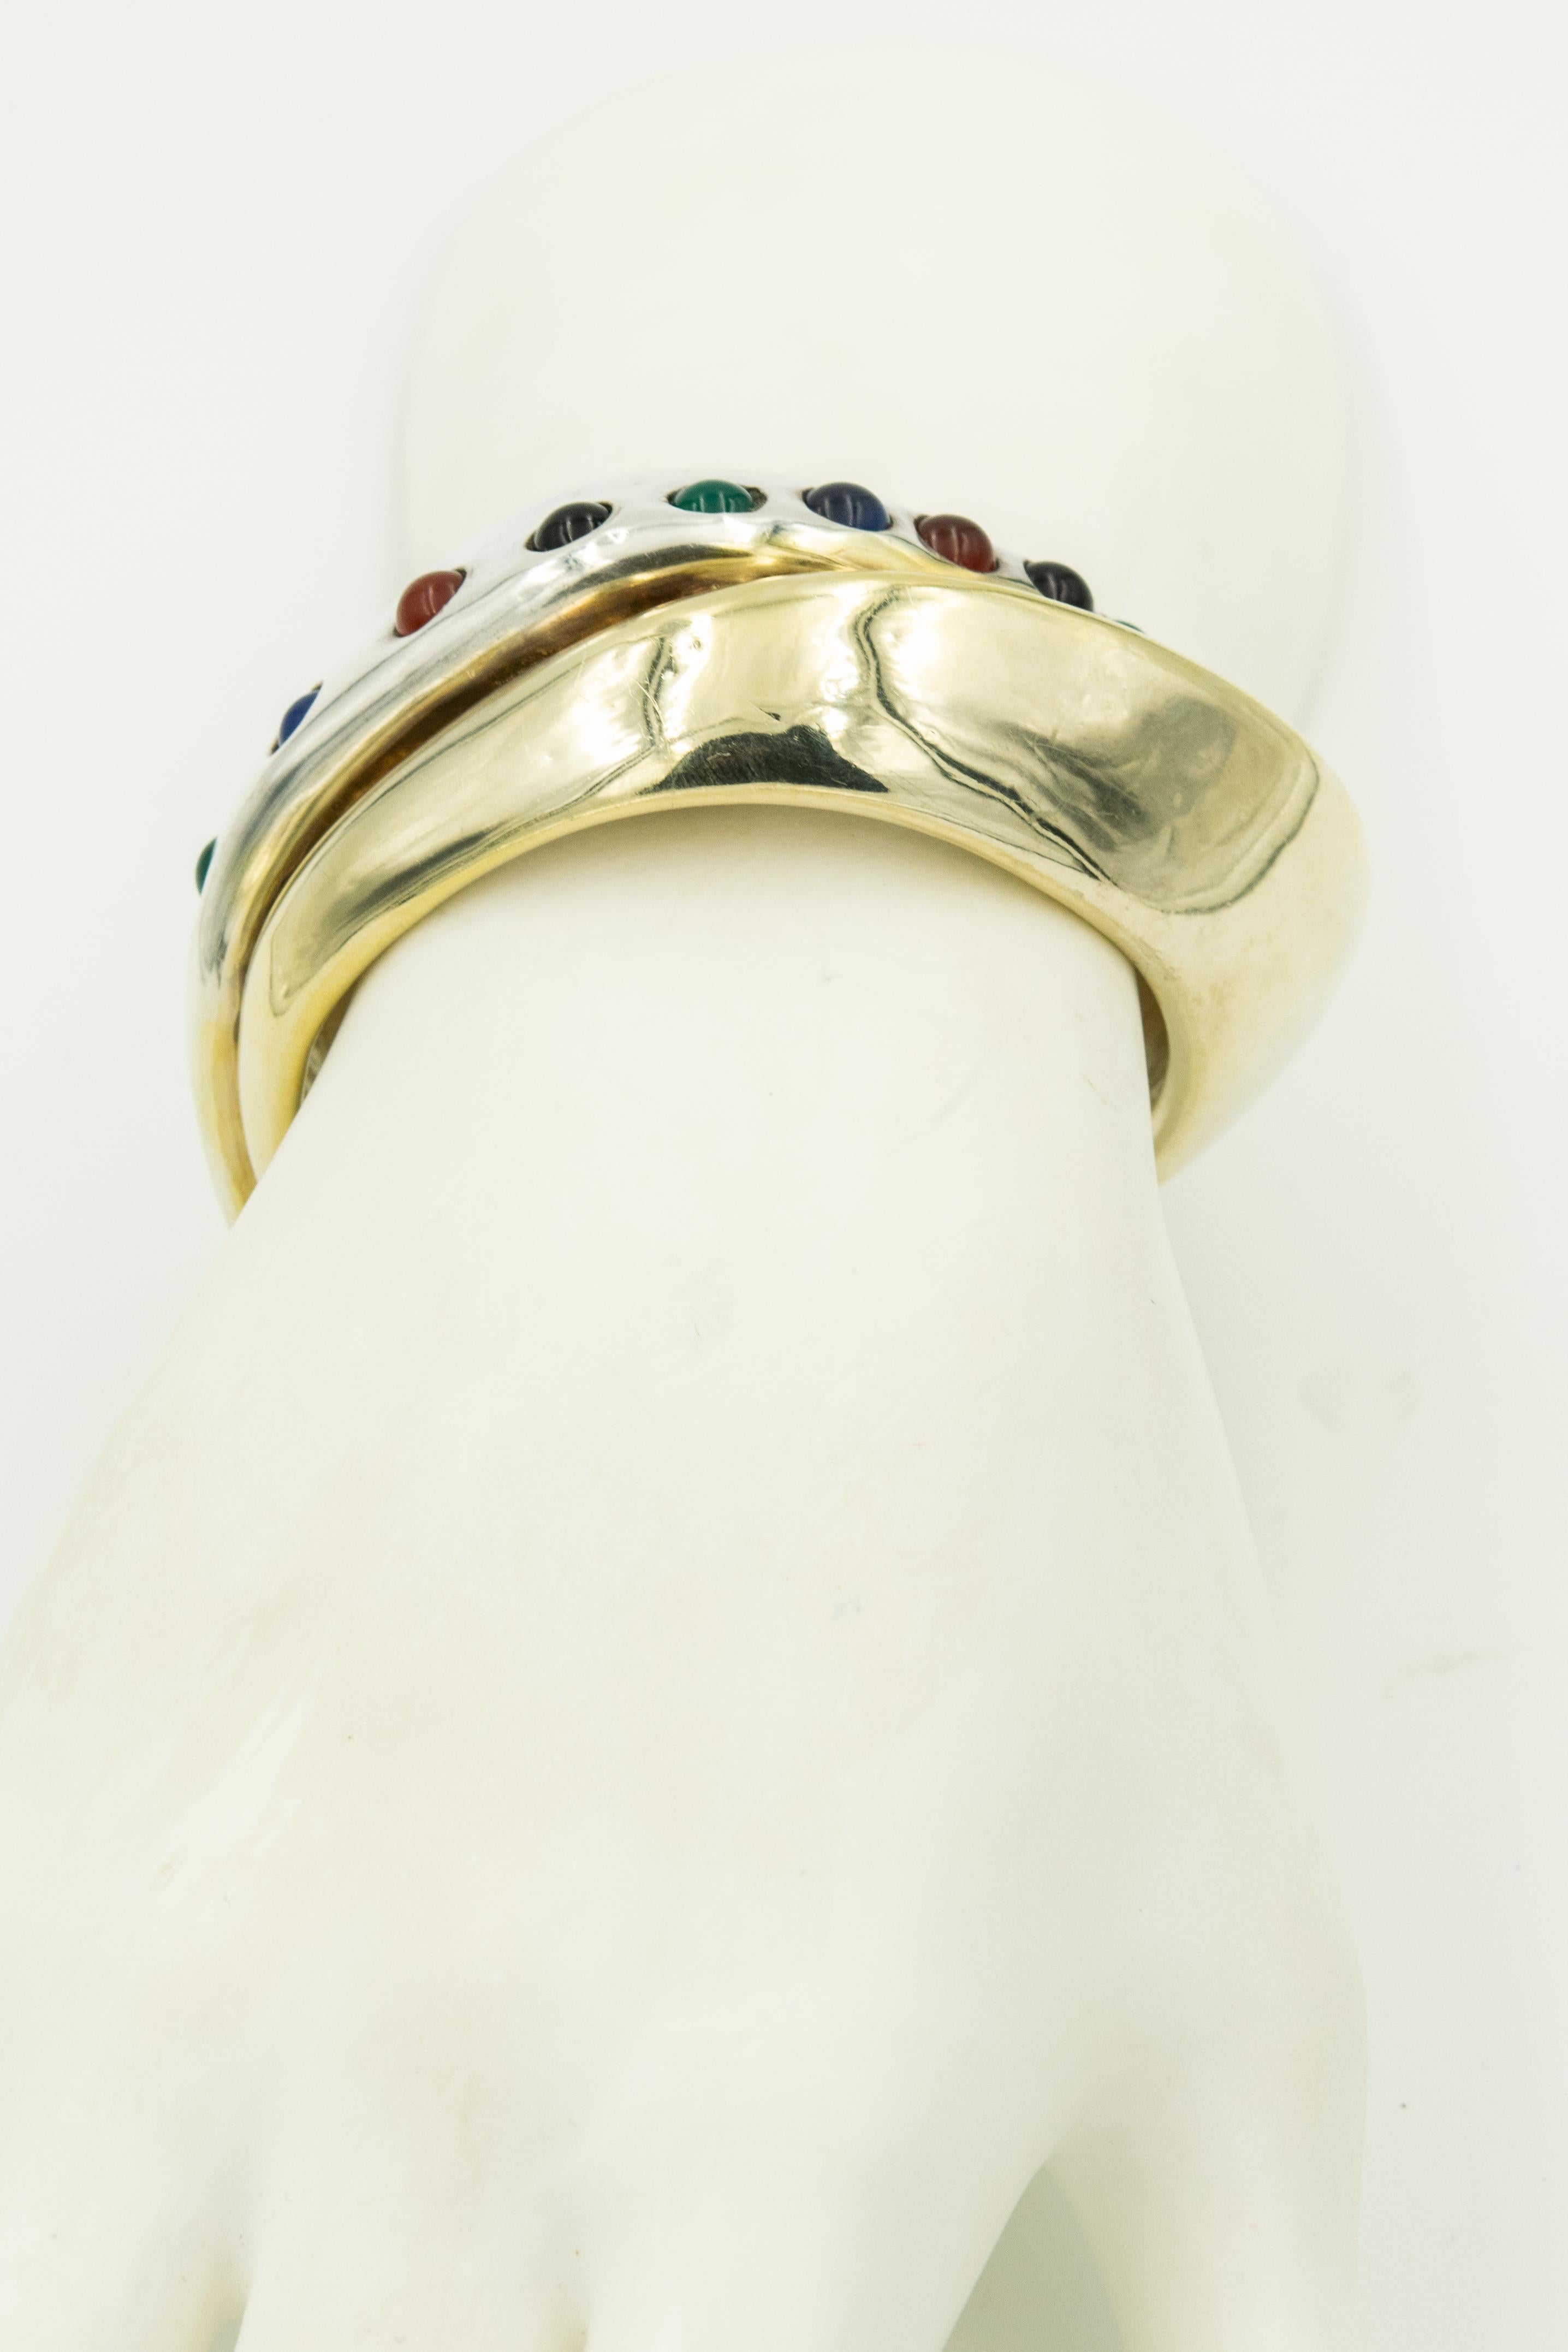 Sam Philipe Sterling Silver Gold Vermeil Modernist Cuff Bracelet Earrings Set 10